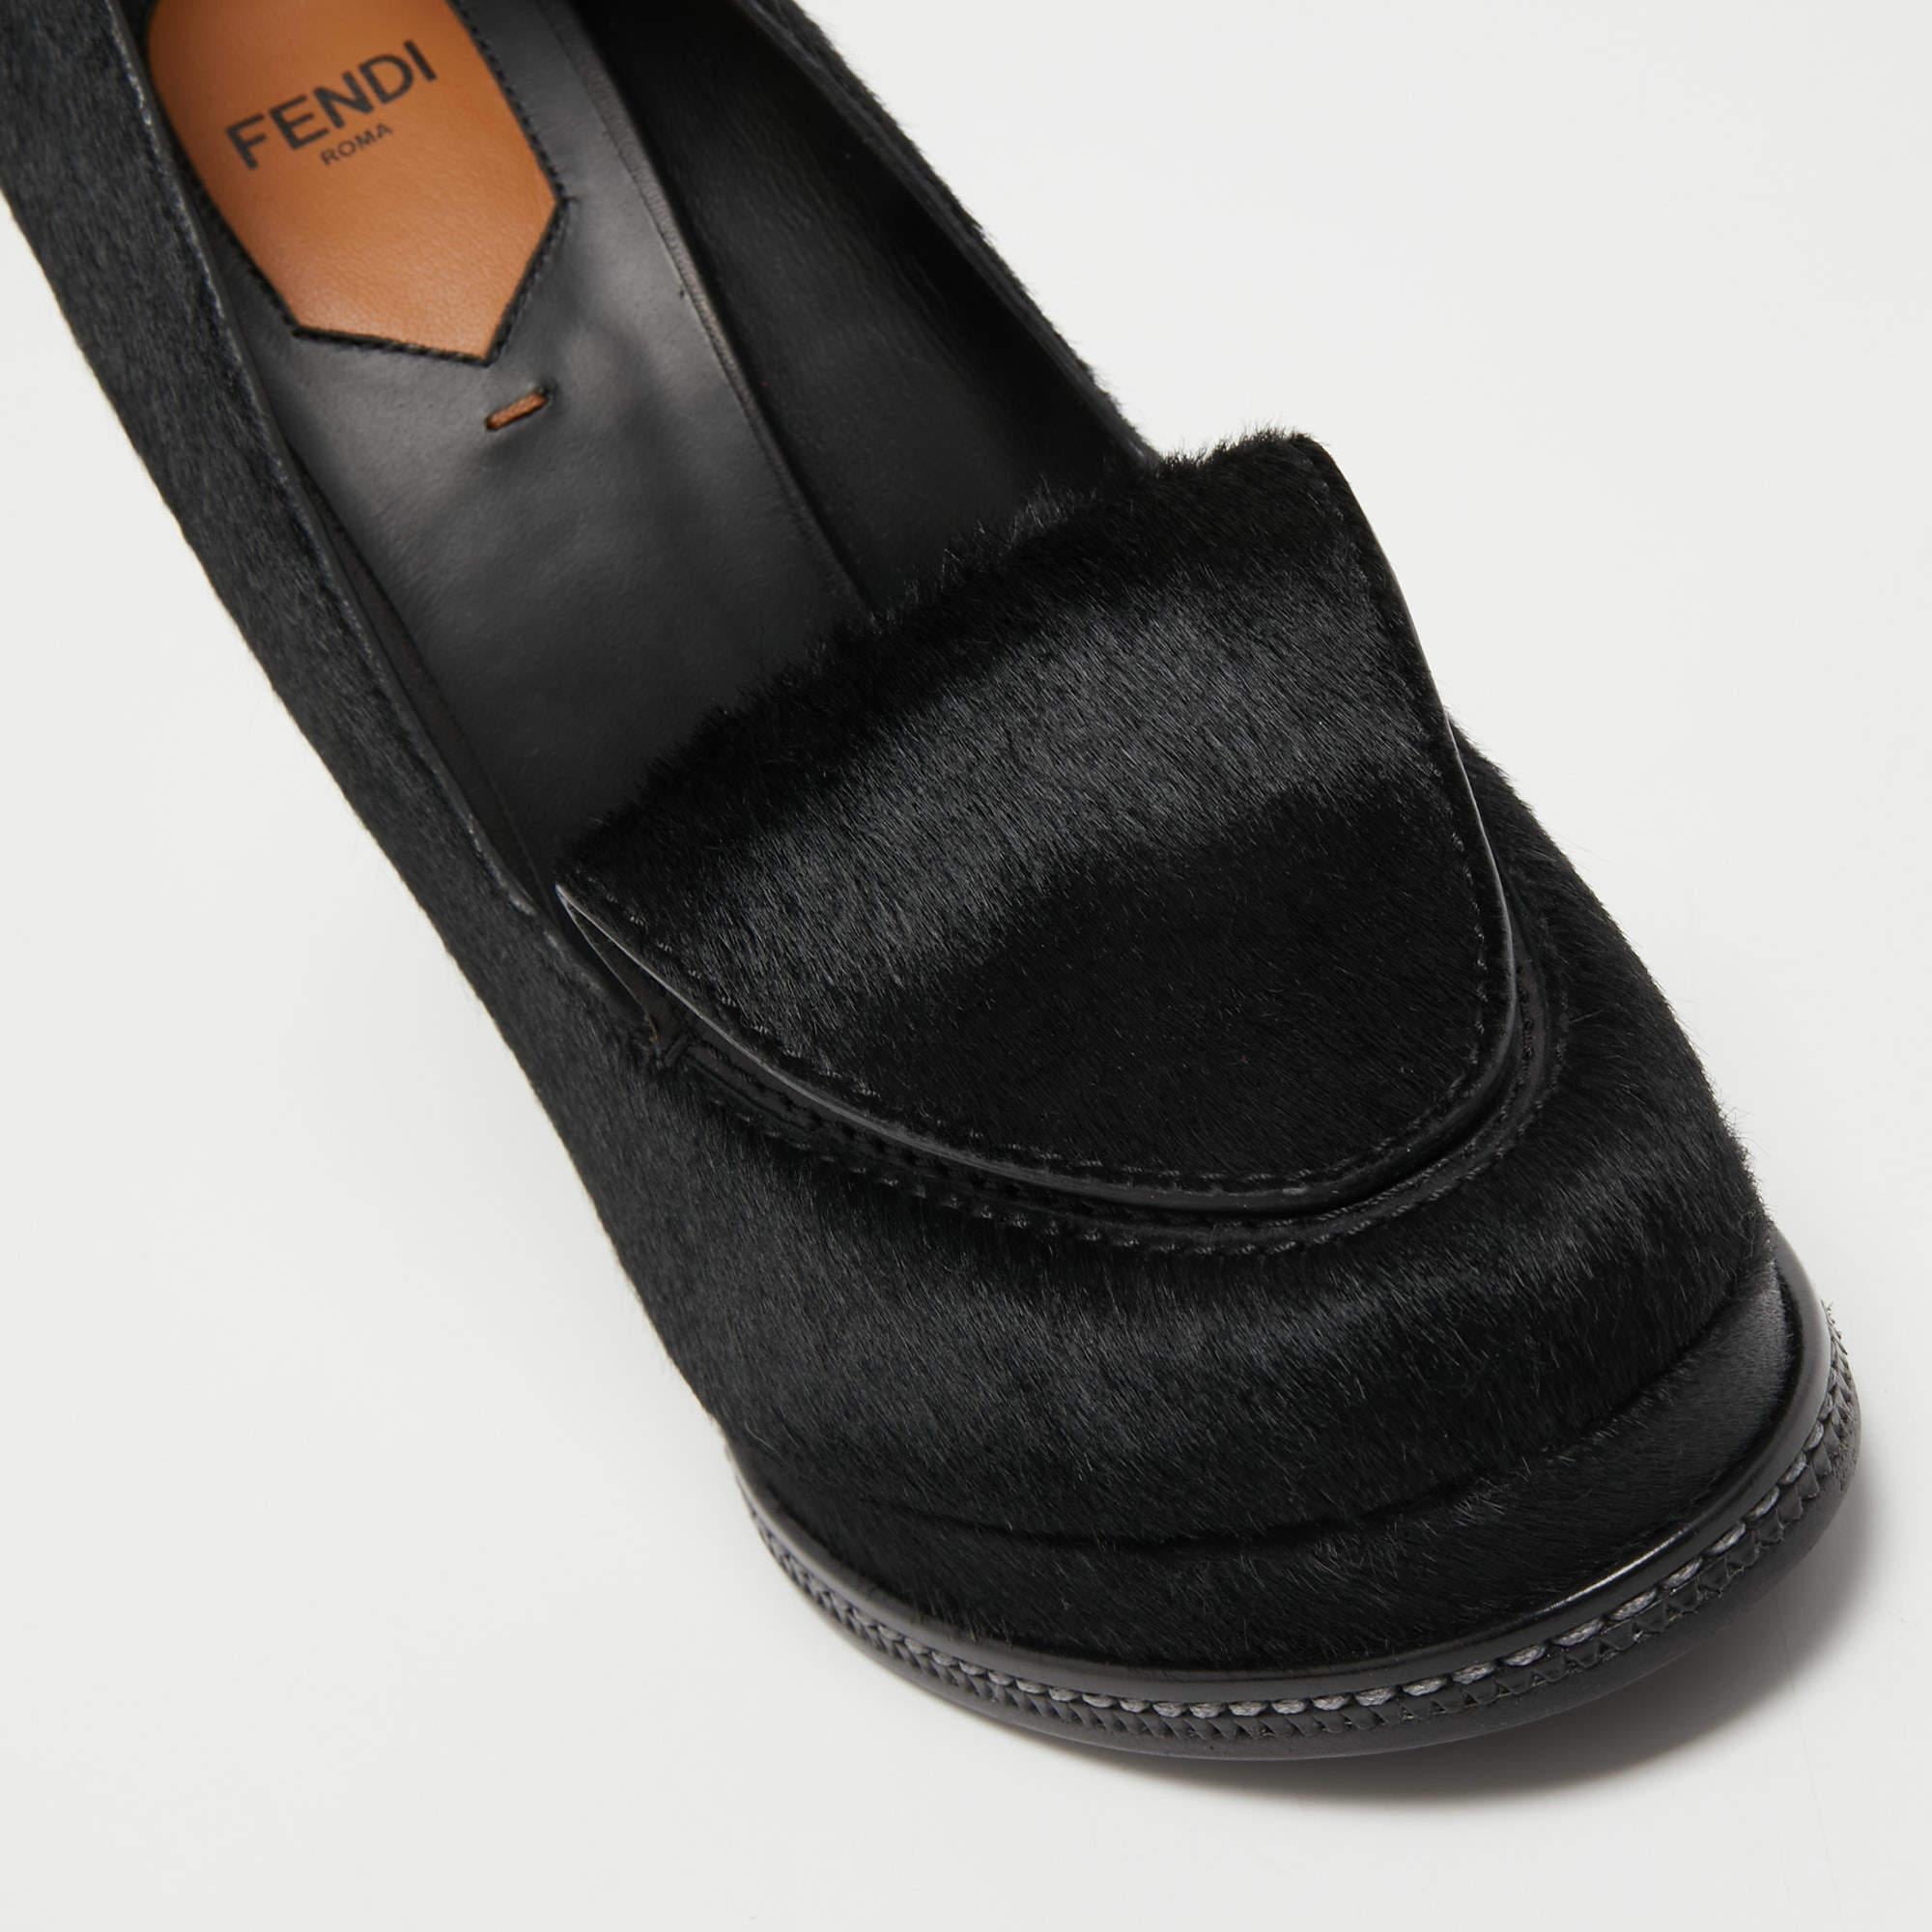 Fendi Black Calf Hair Block Heel Loafer Pumps Size 39 3